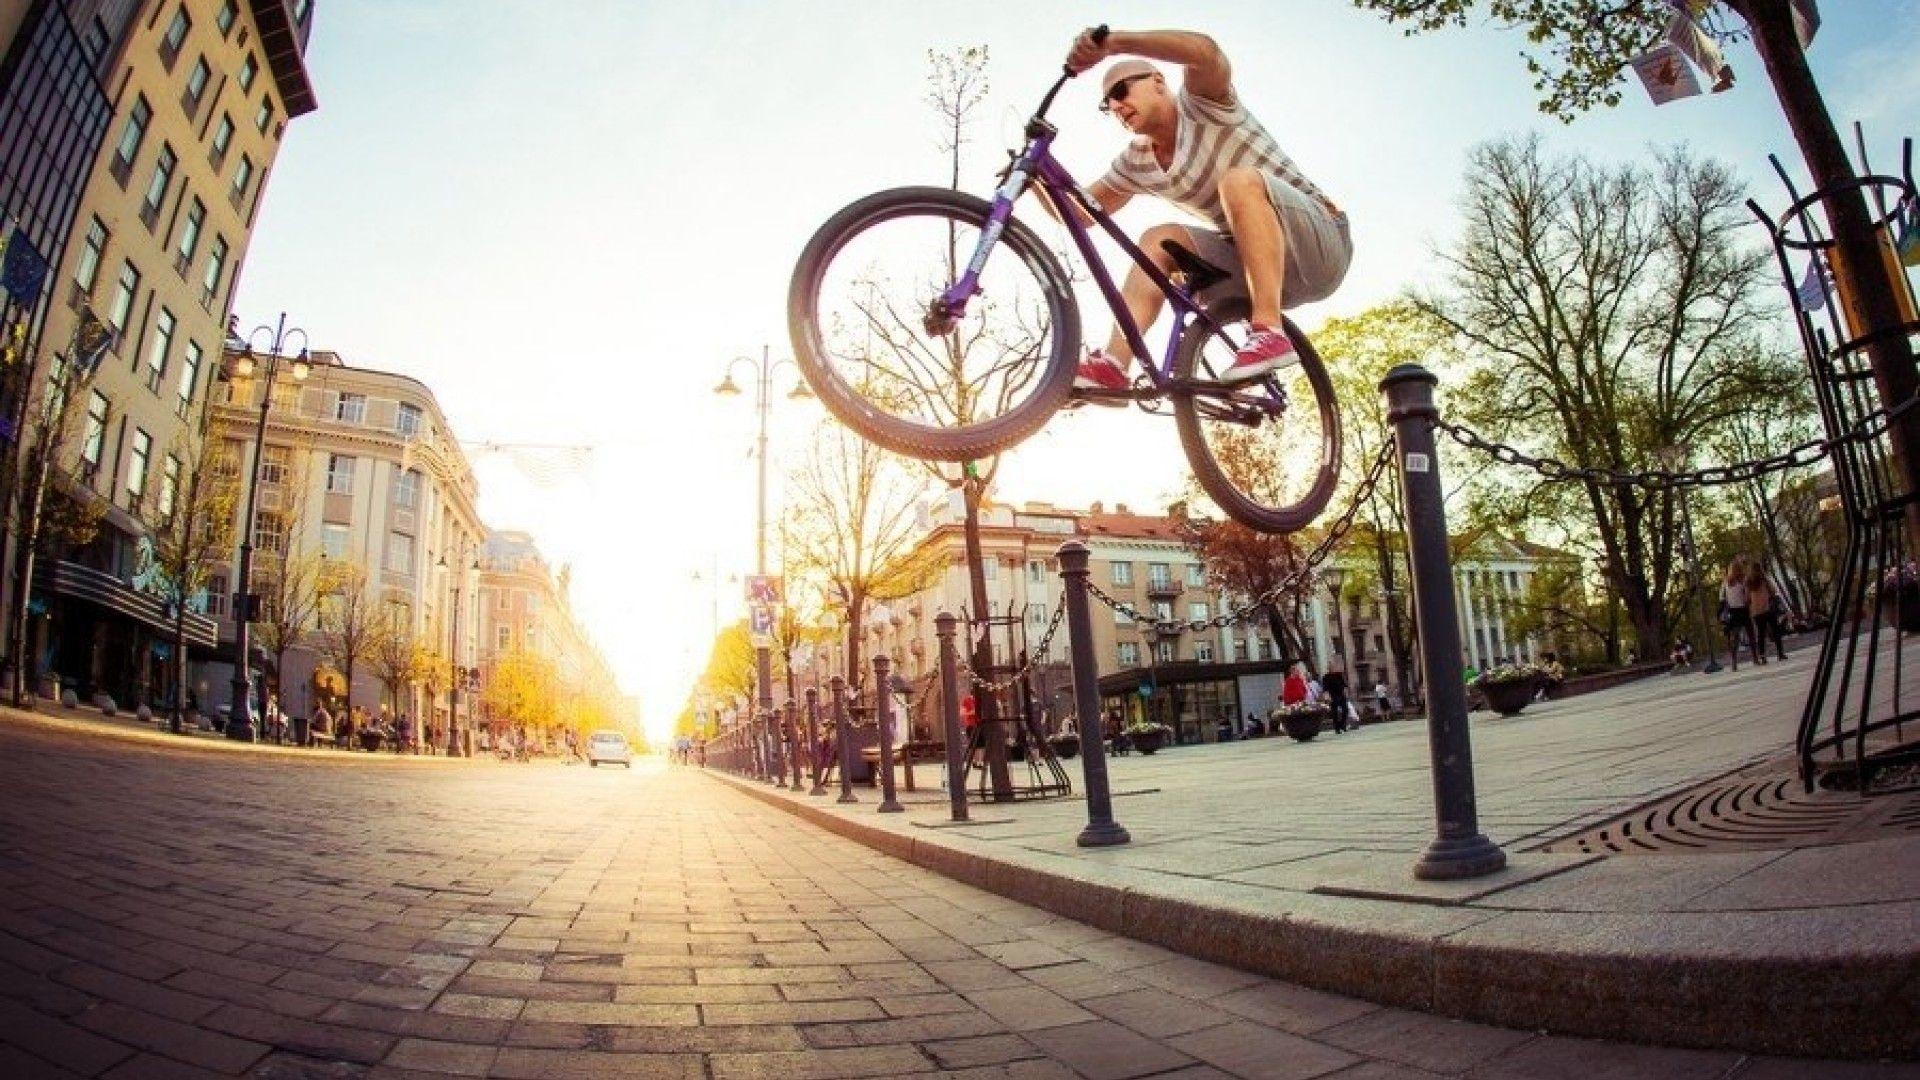 Download wallpaper 1350x2400 bike bmx jump stunt black iphone  876s6 for parallax hd background